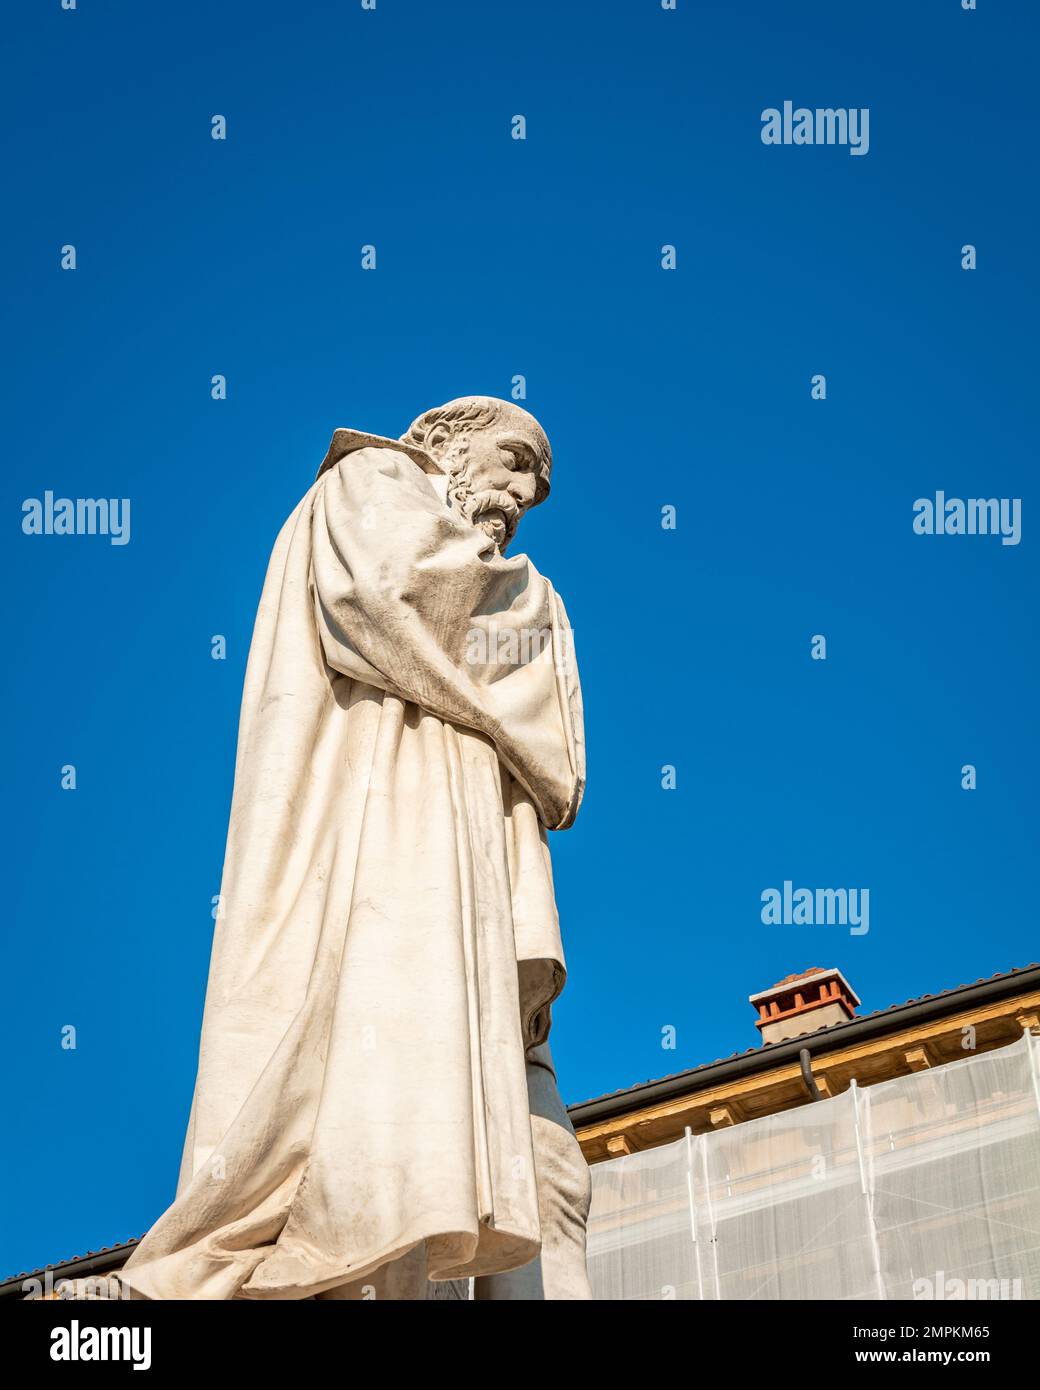 marble statue by the famous Venetian architect and Ubanist Michele Sanmicheli (1484-1559) - Verona, Veneto province, northern Italy Stock Photo